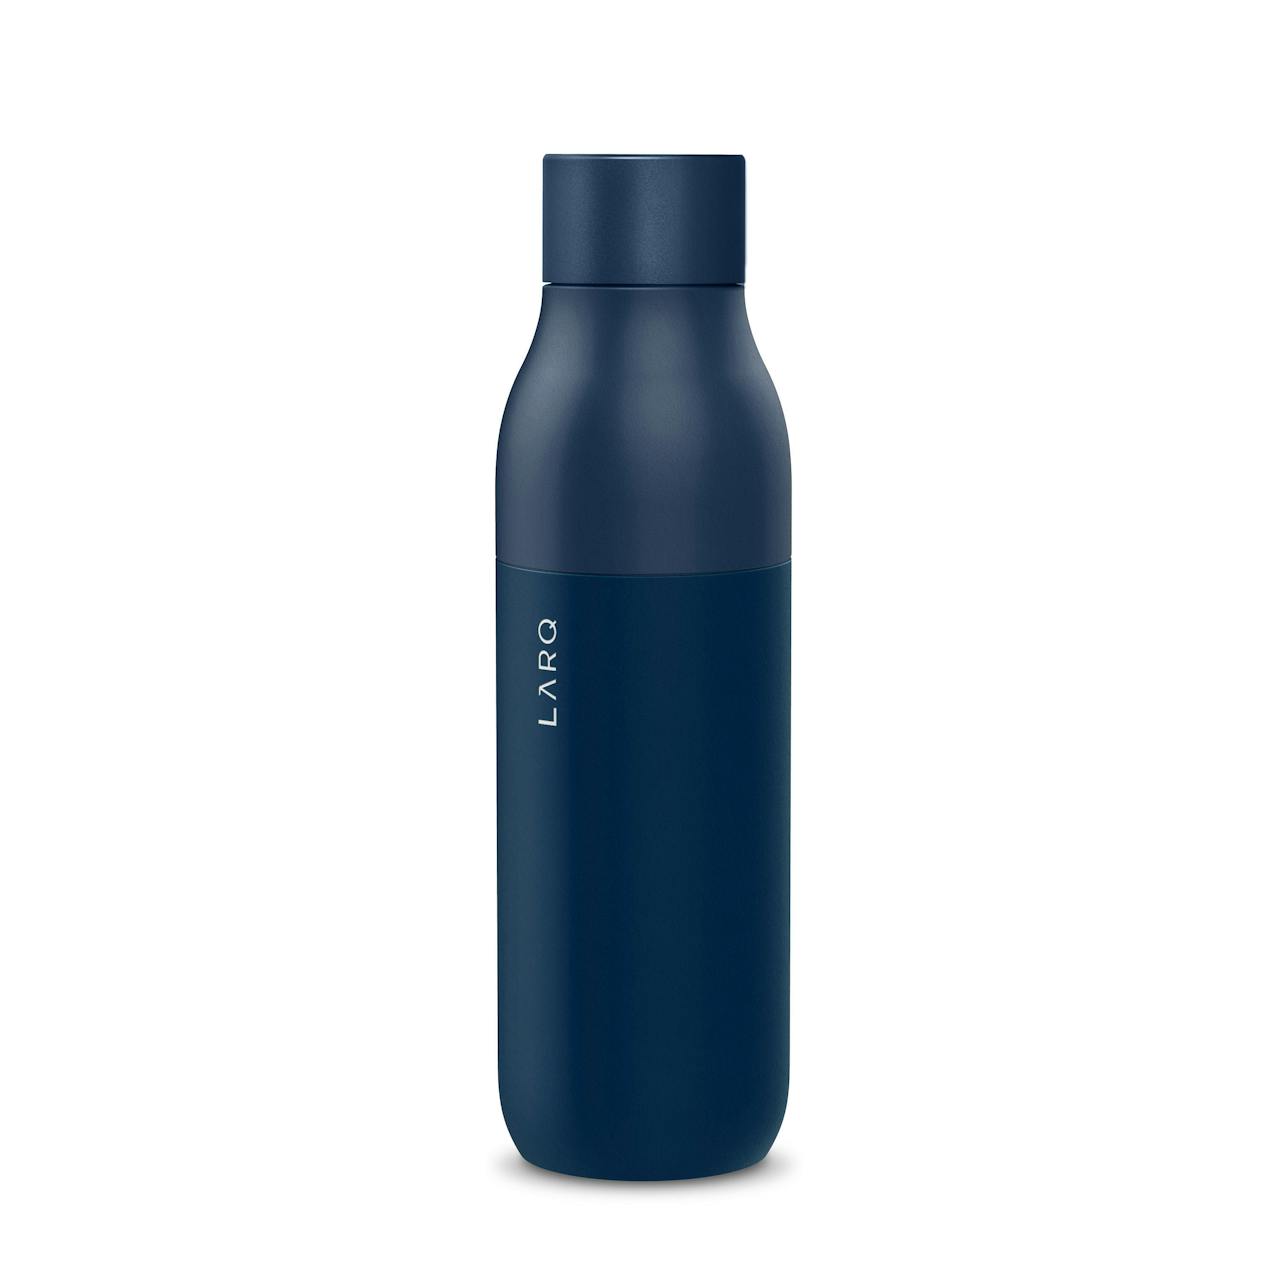 LARQ Larq Bottle - Self Sanitizing Water Bottle